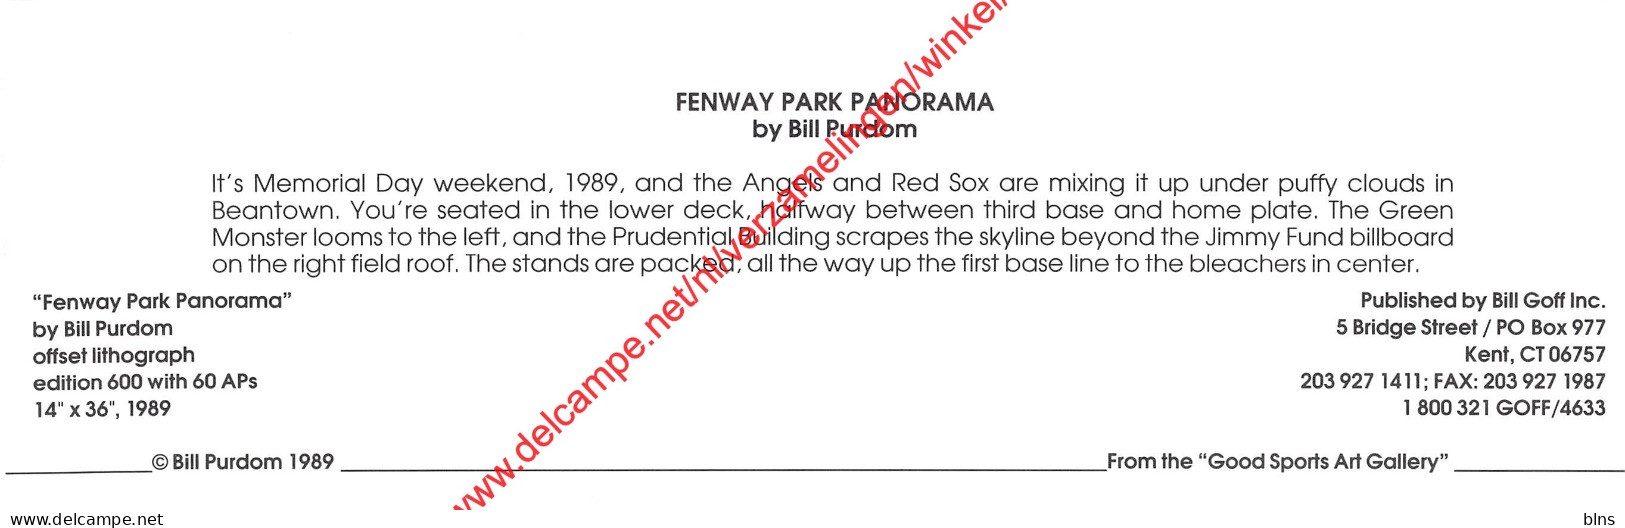 Fenway Park Panorama By Bill Purdom - Baseball - 23x7cm - Baseball